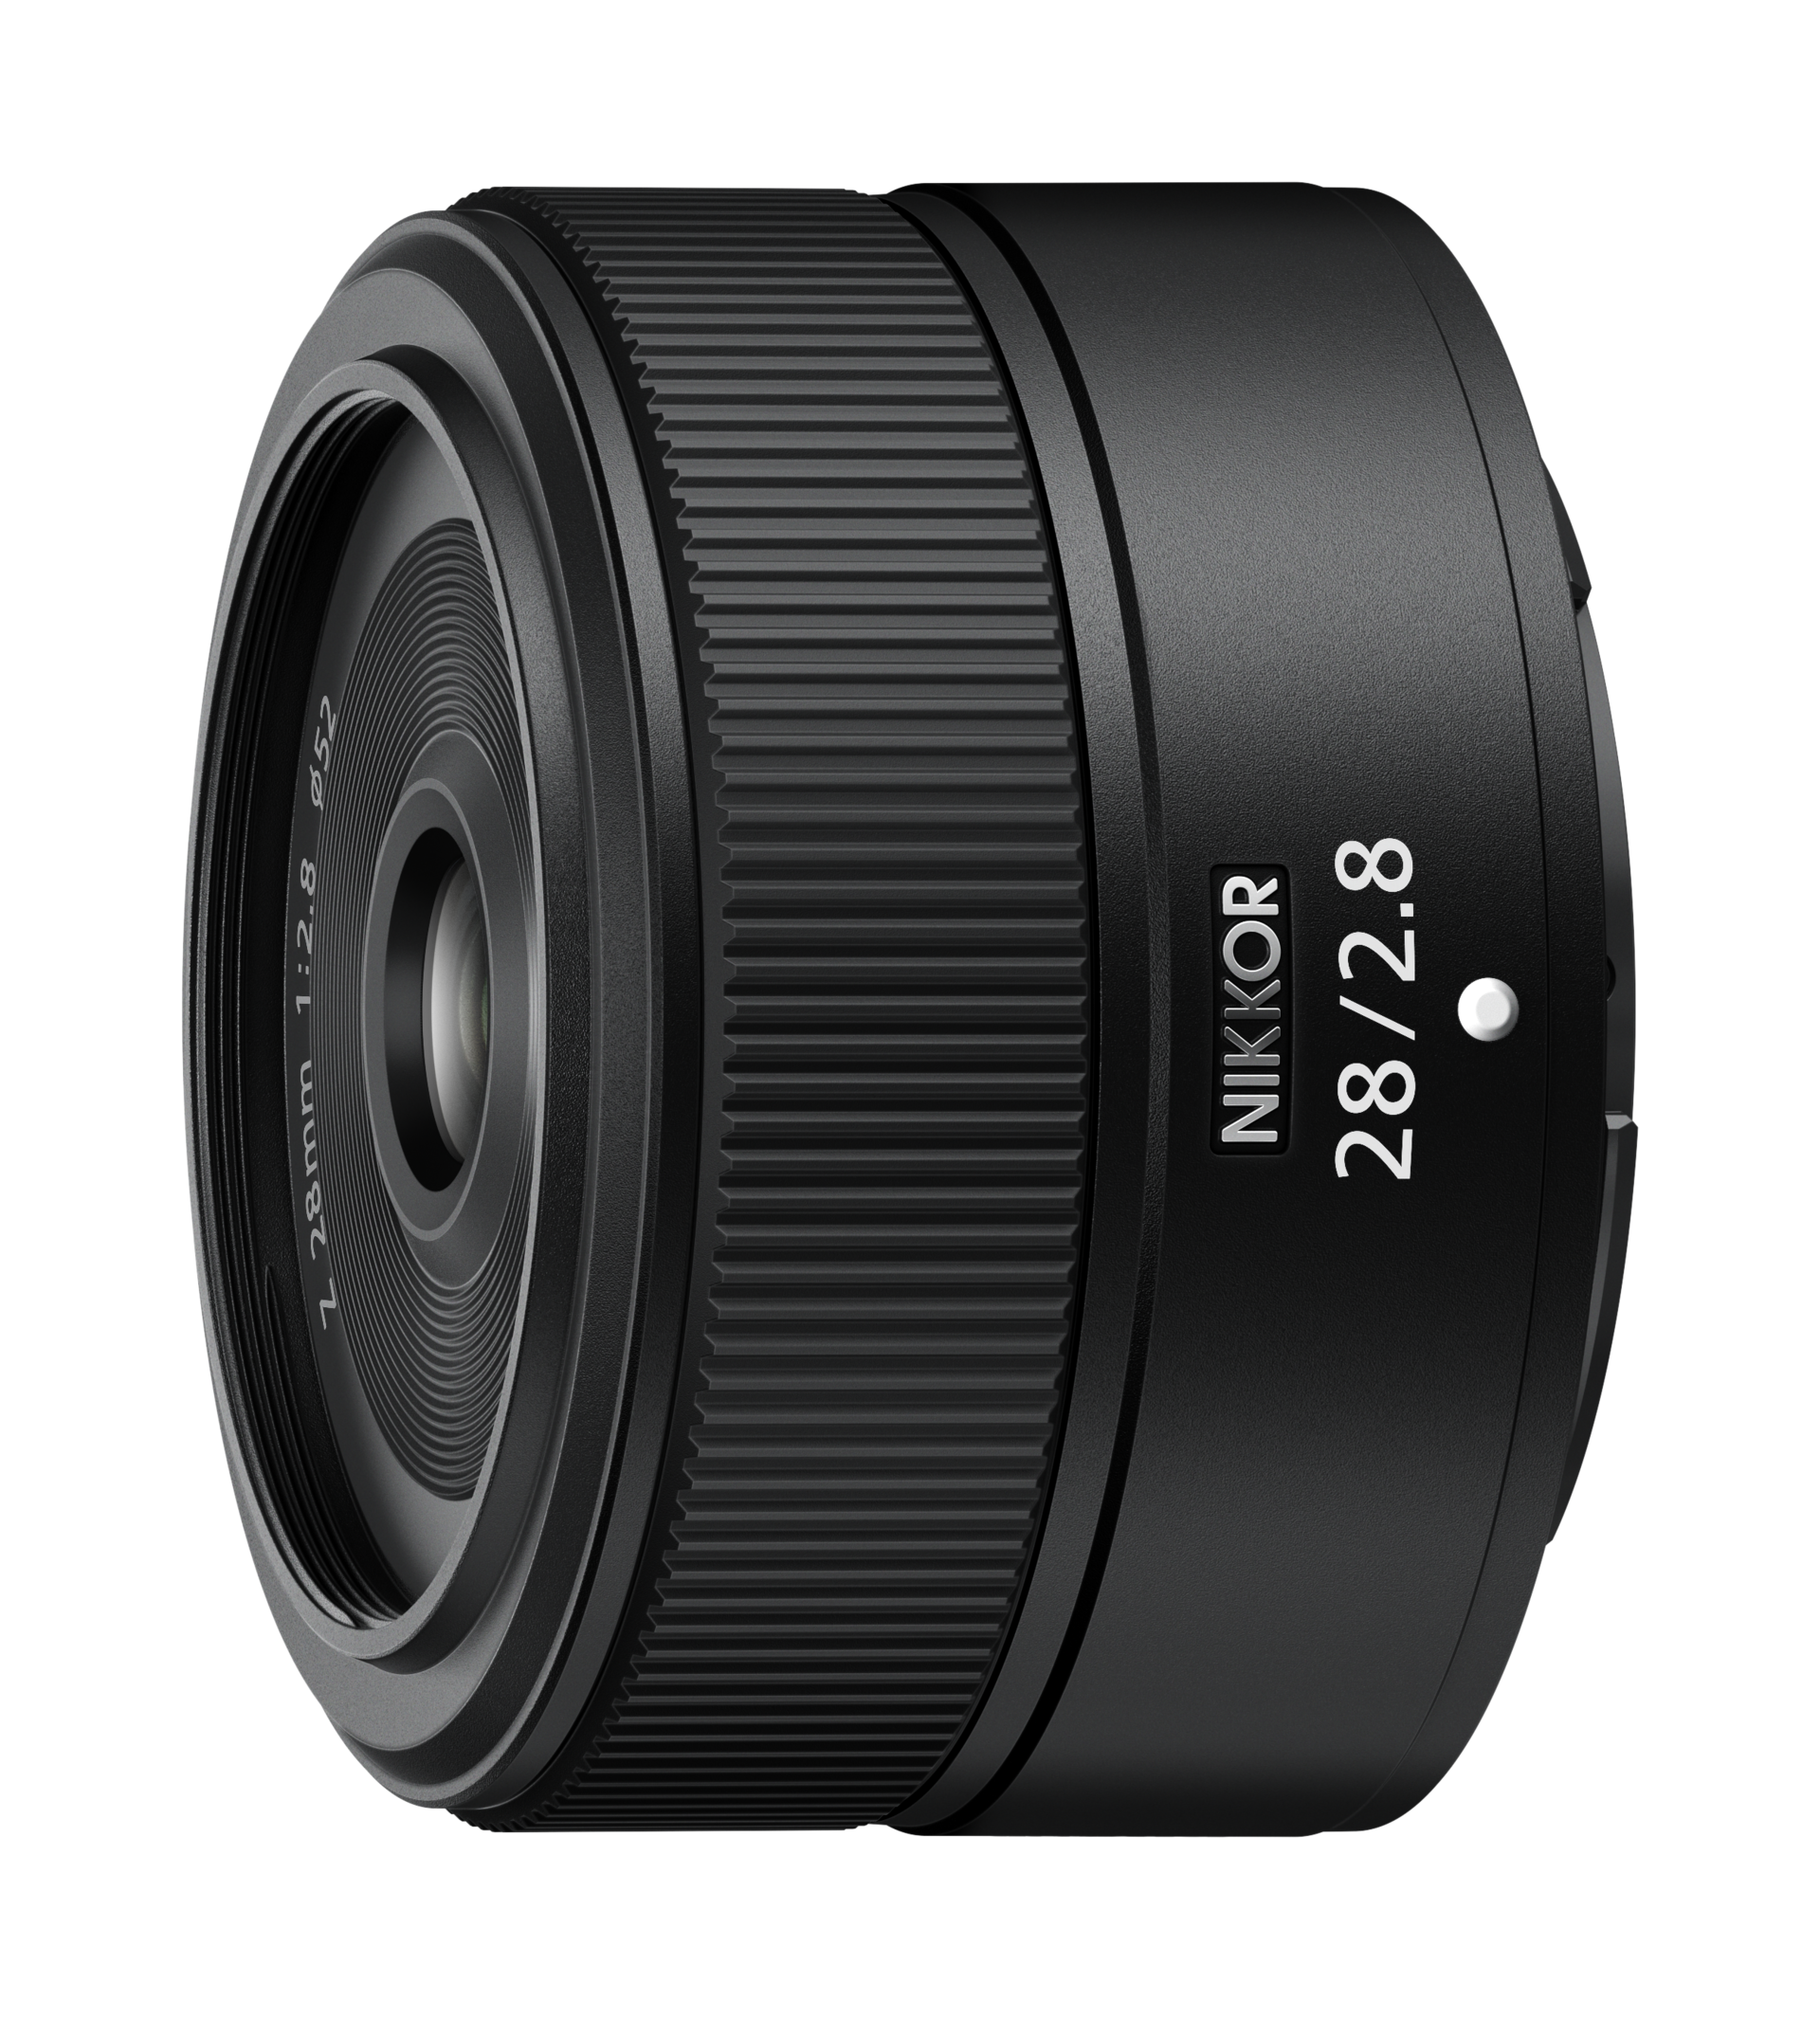 NIKKOR Z 28mm f/2.8 | Bright f/2.8 wide-angle prime lens